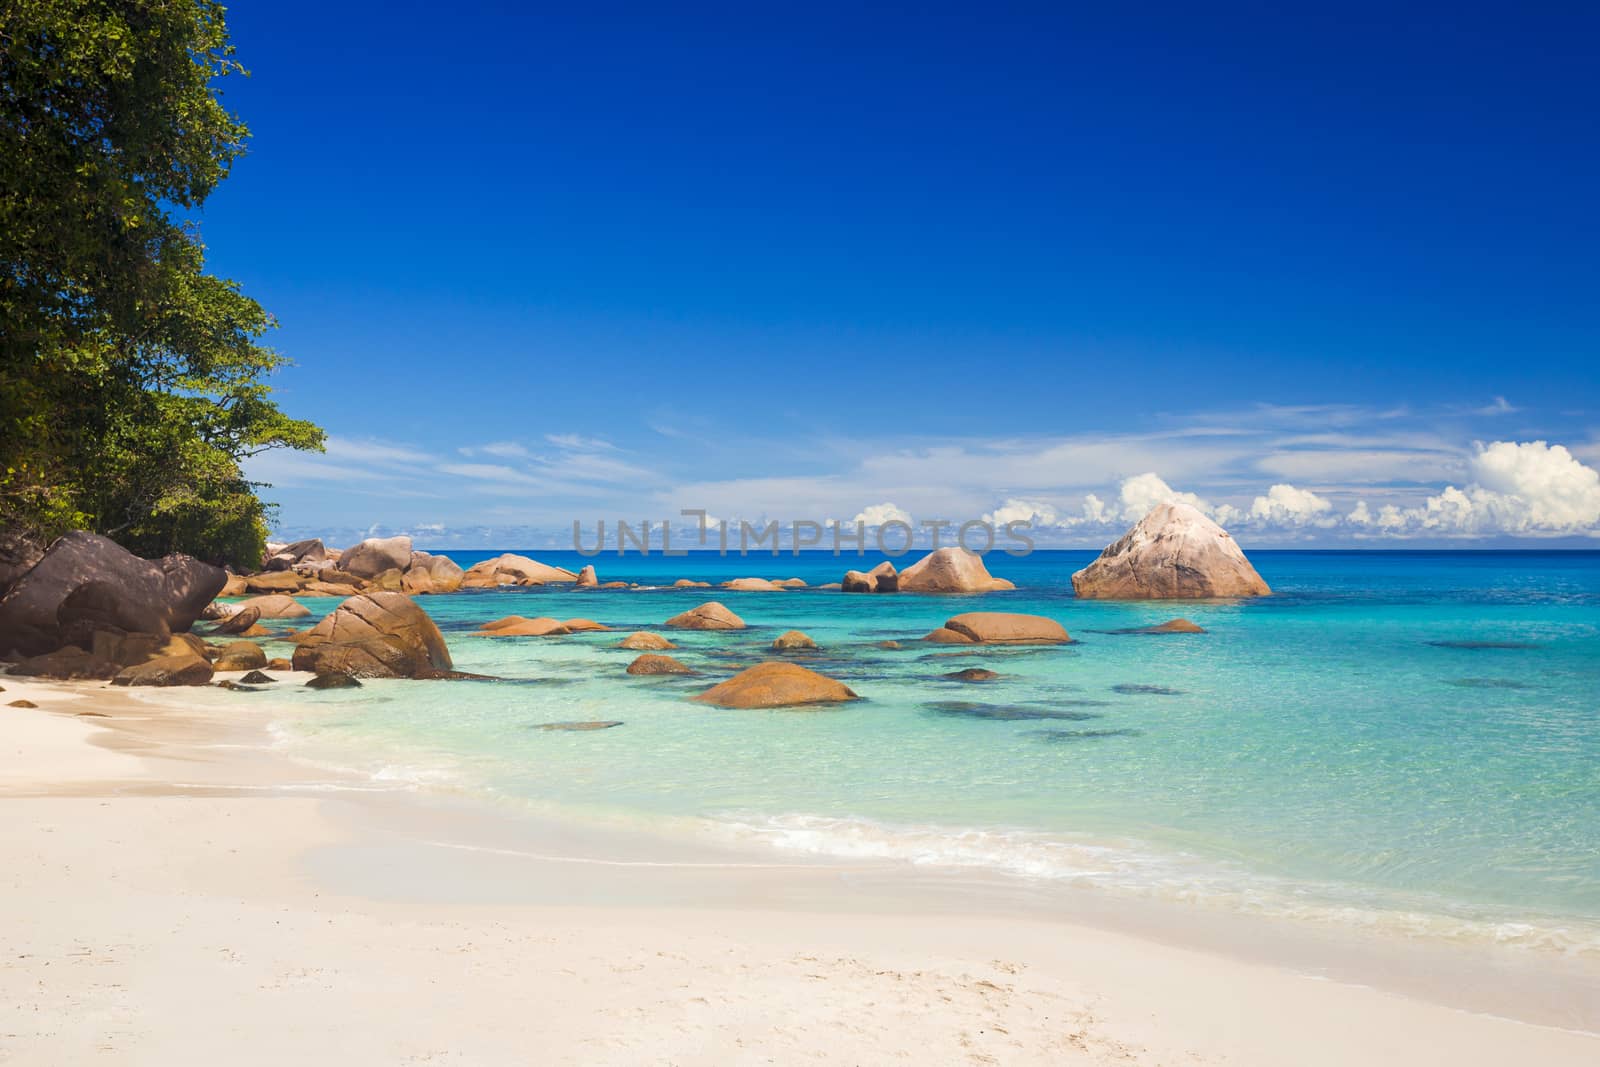 Beautiful view of Anze Lazio beach in Praslin, Seychelles